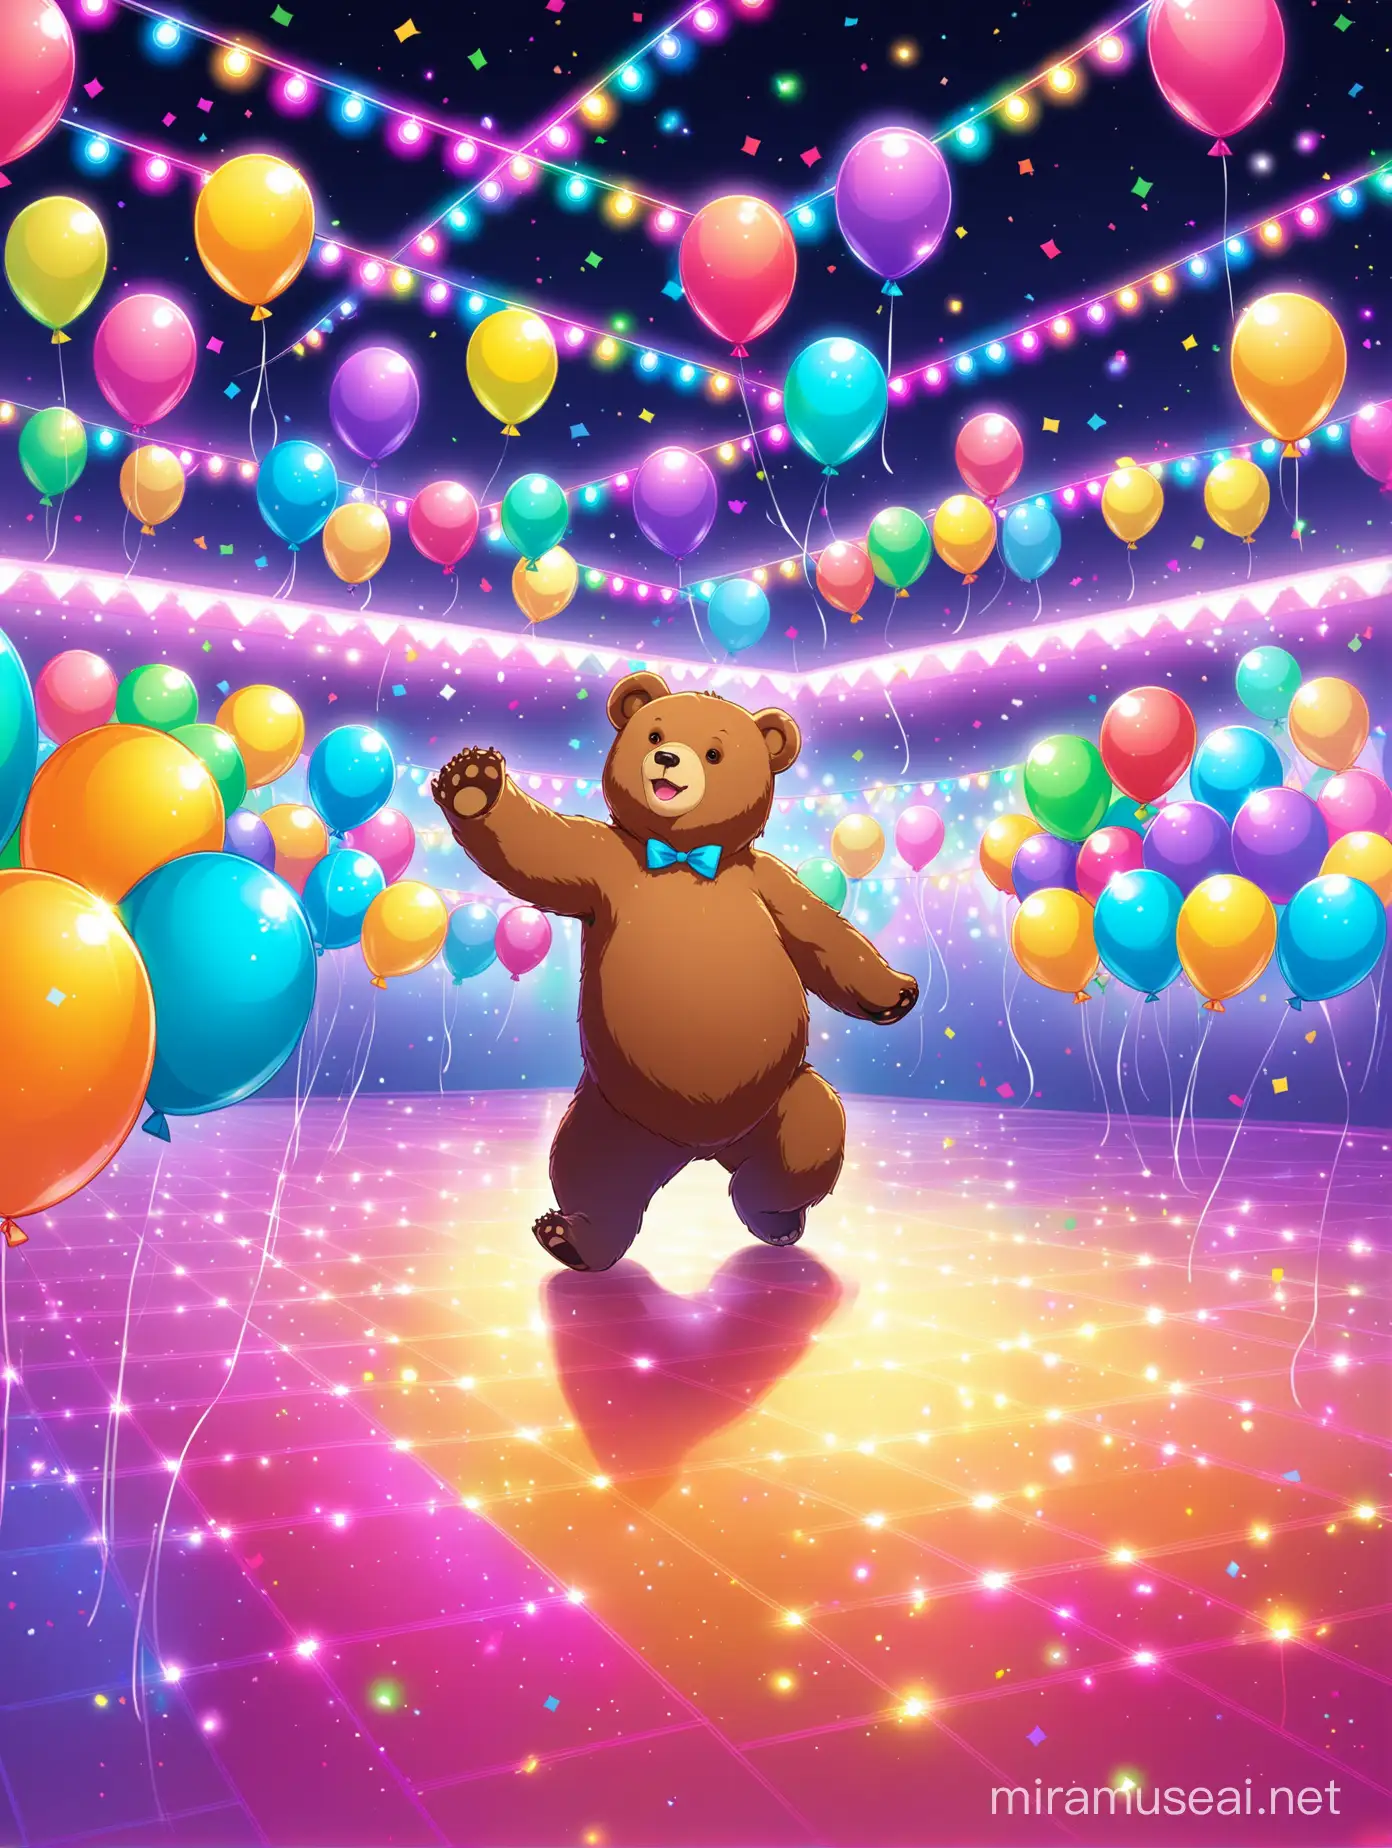 Energetic Bear Dancing Amid Vibrant Party Atmosphere